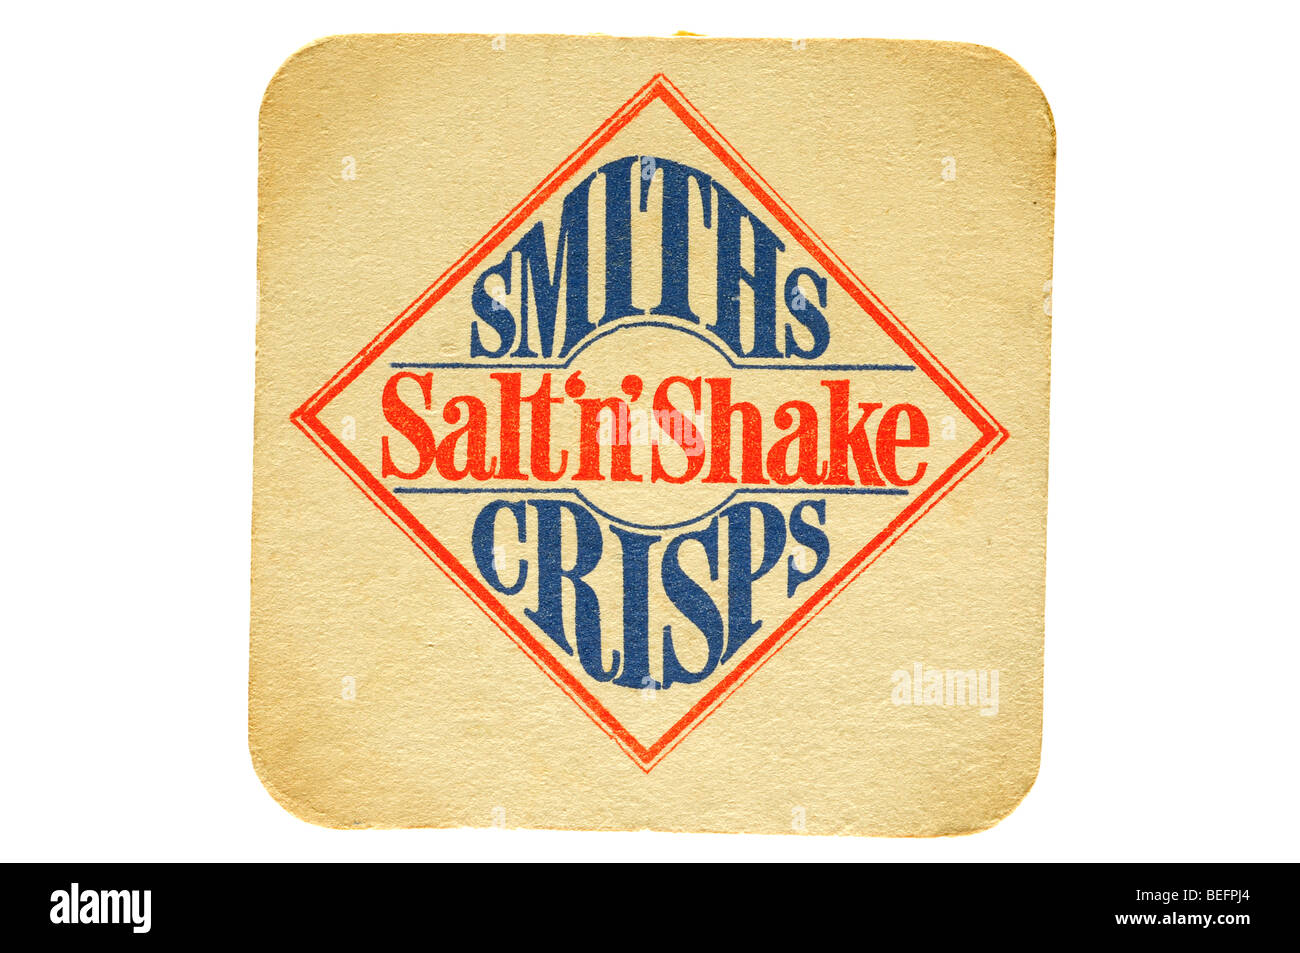 Smiths crisps salt shake hi-res stock photography and images - Alamy